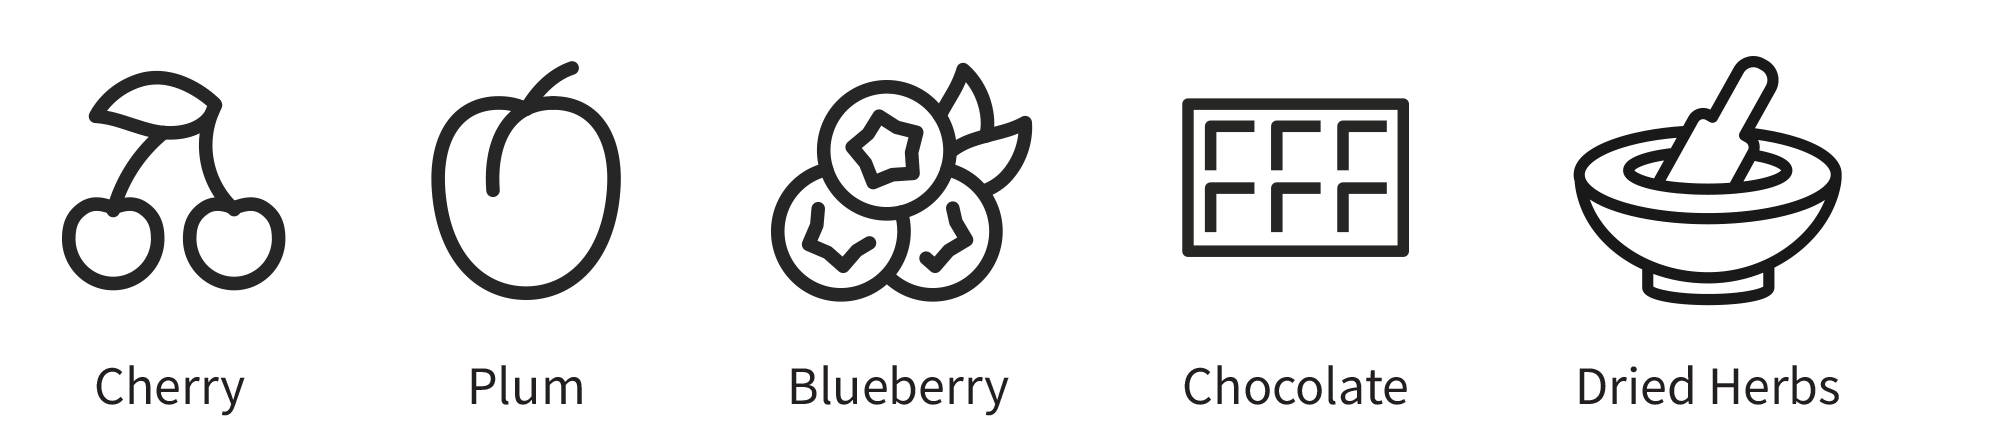 merlot flavors: cherry, plum, blueberry, chocolate, dried herbs